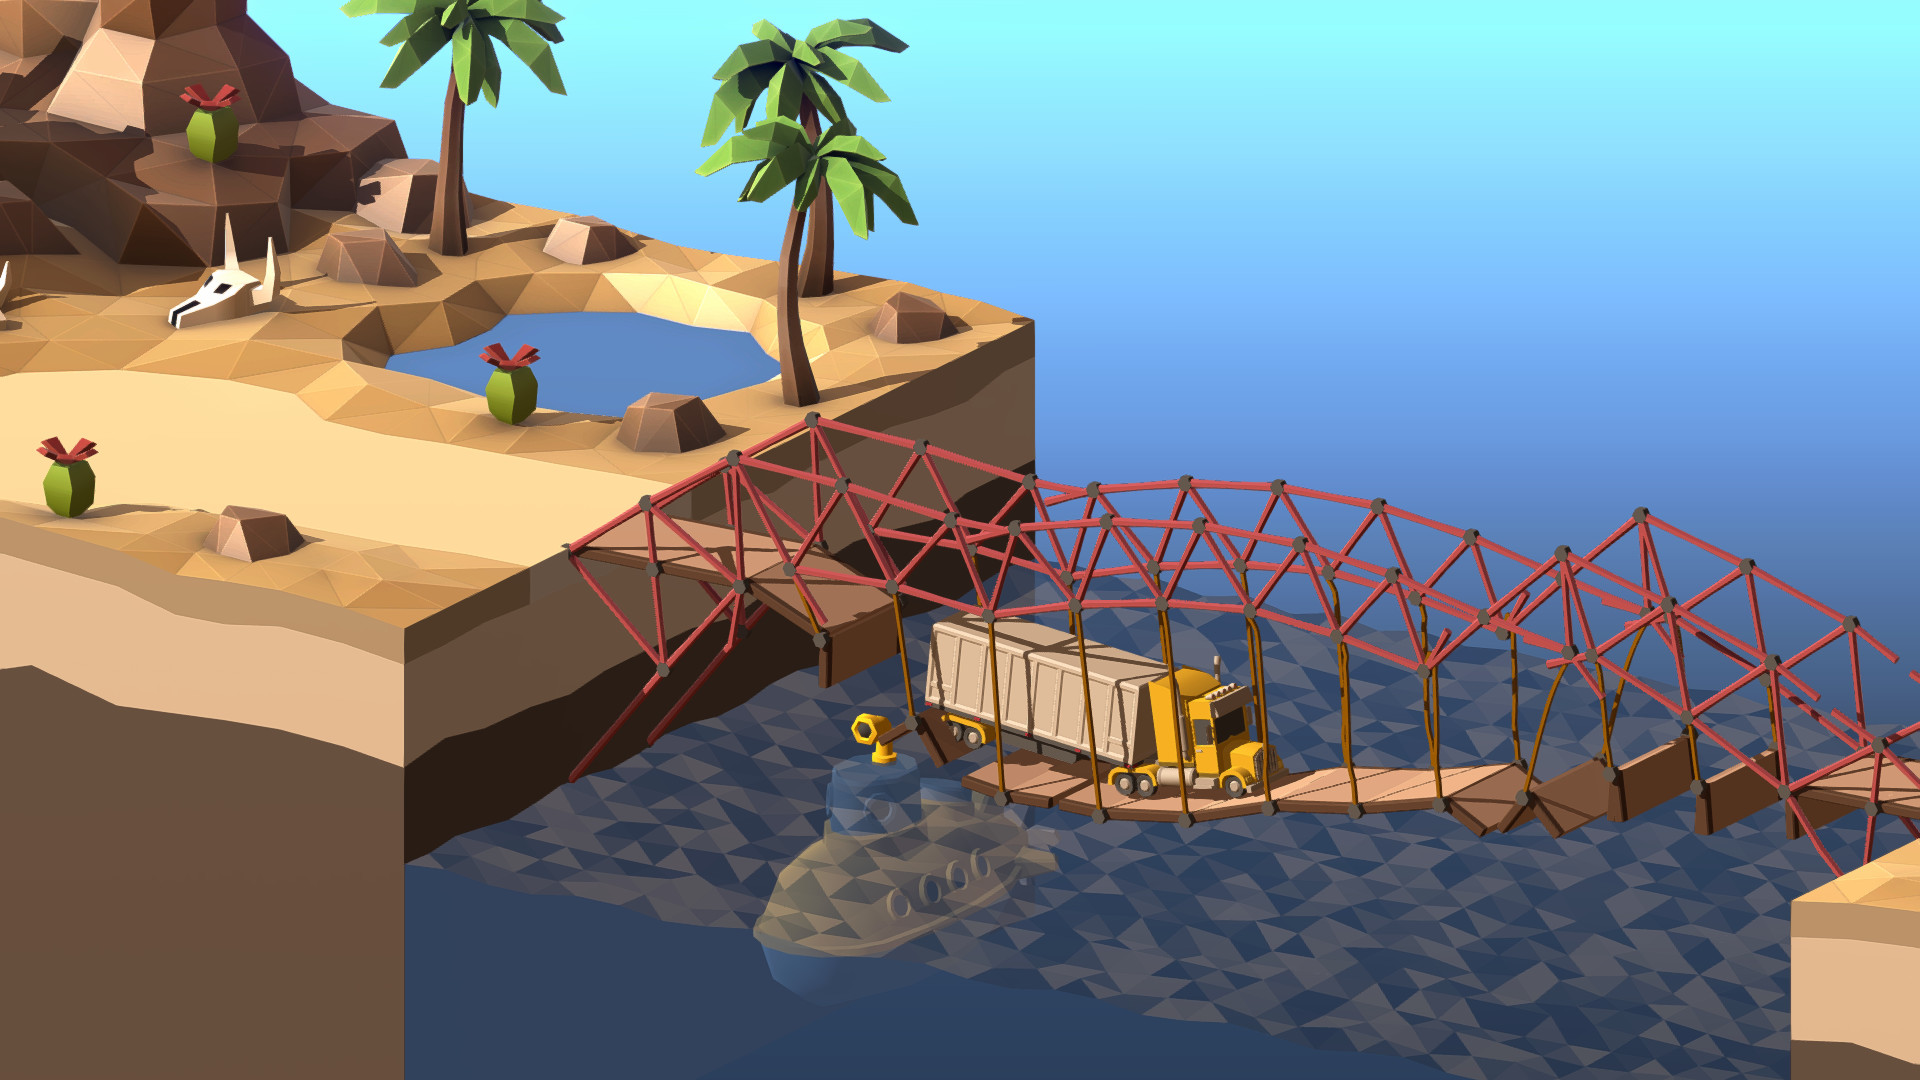 Poly Bridge 2 on Steam